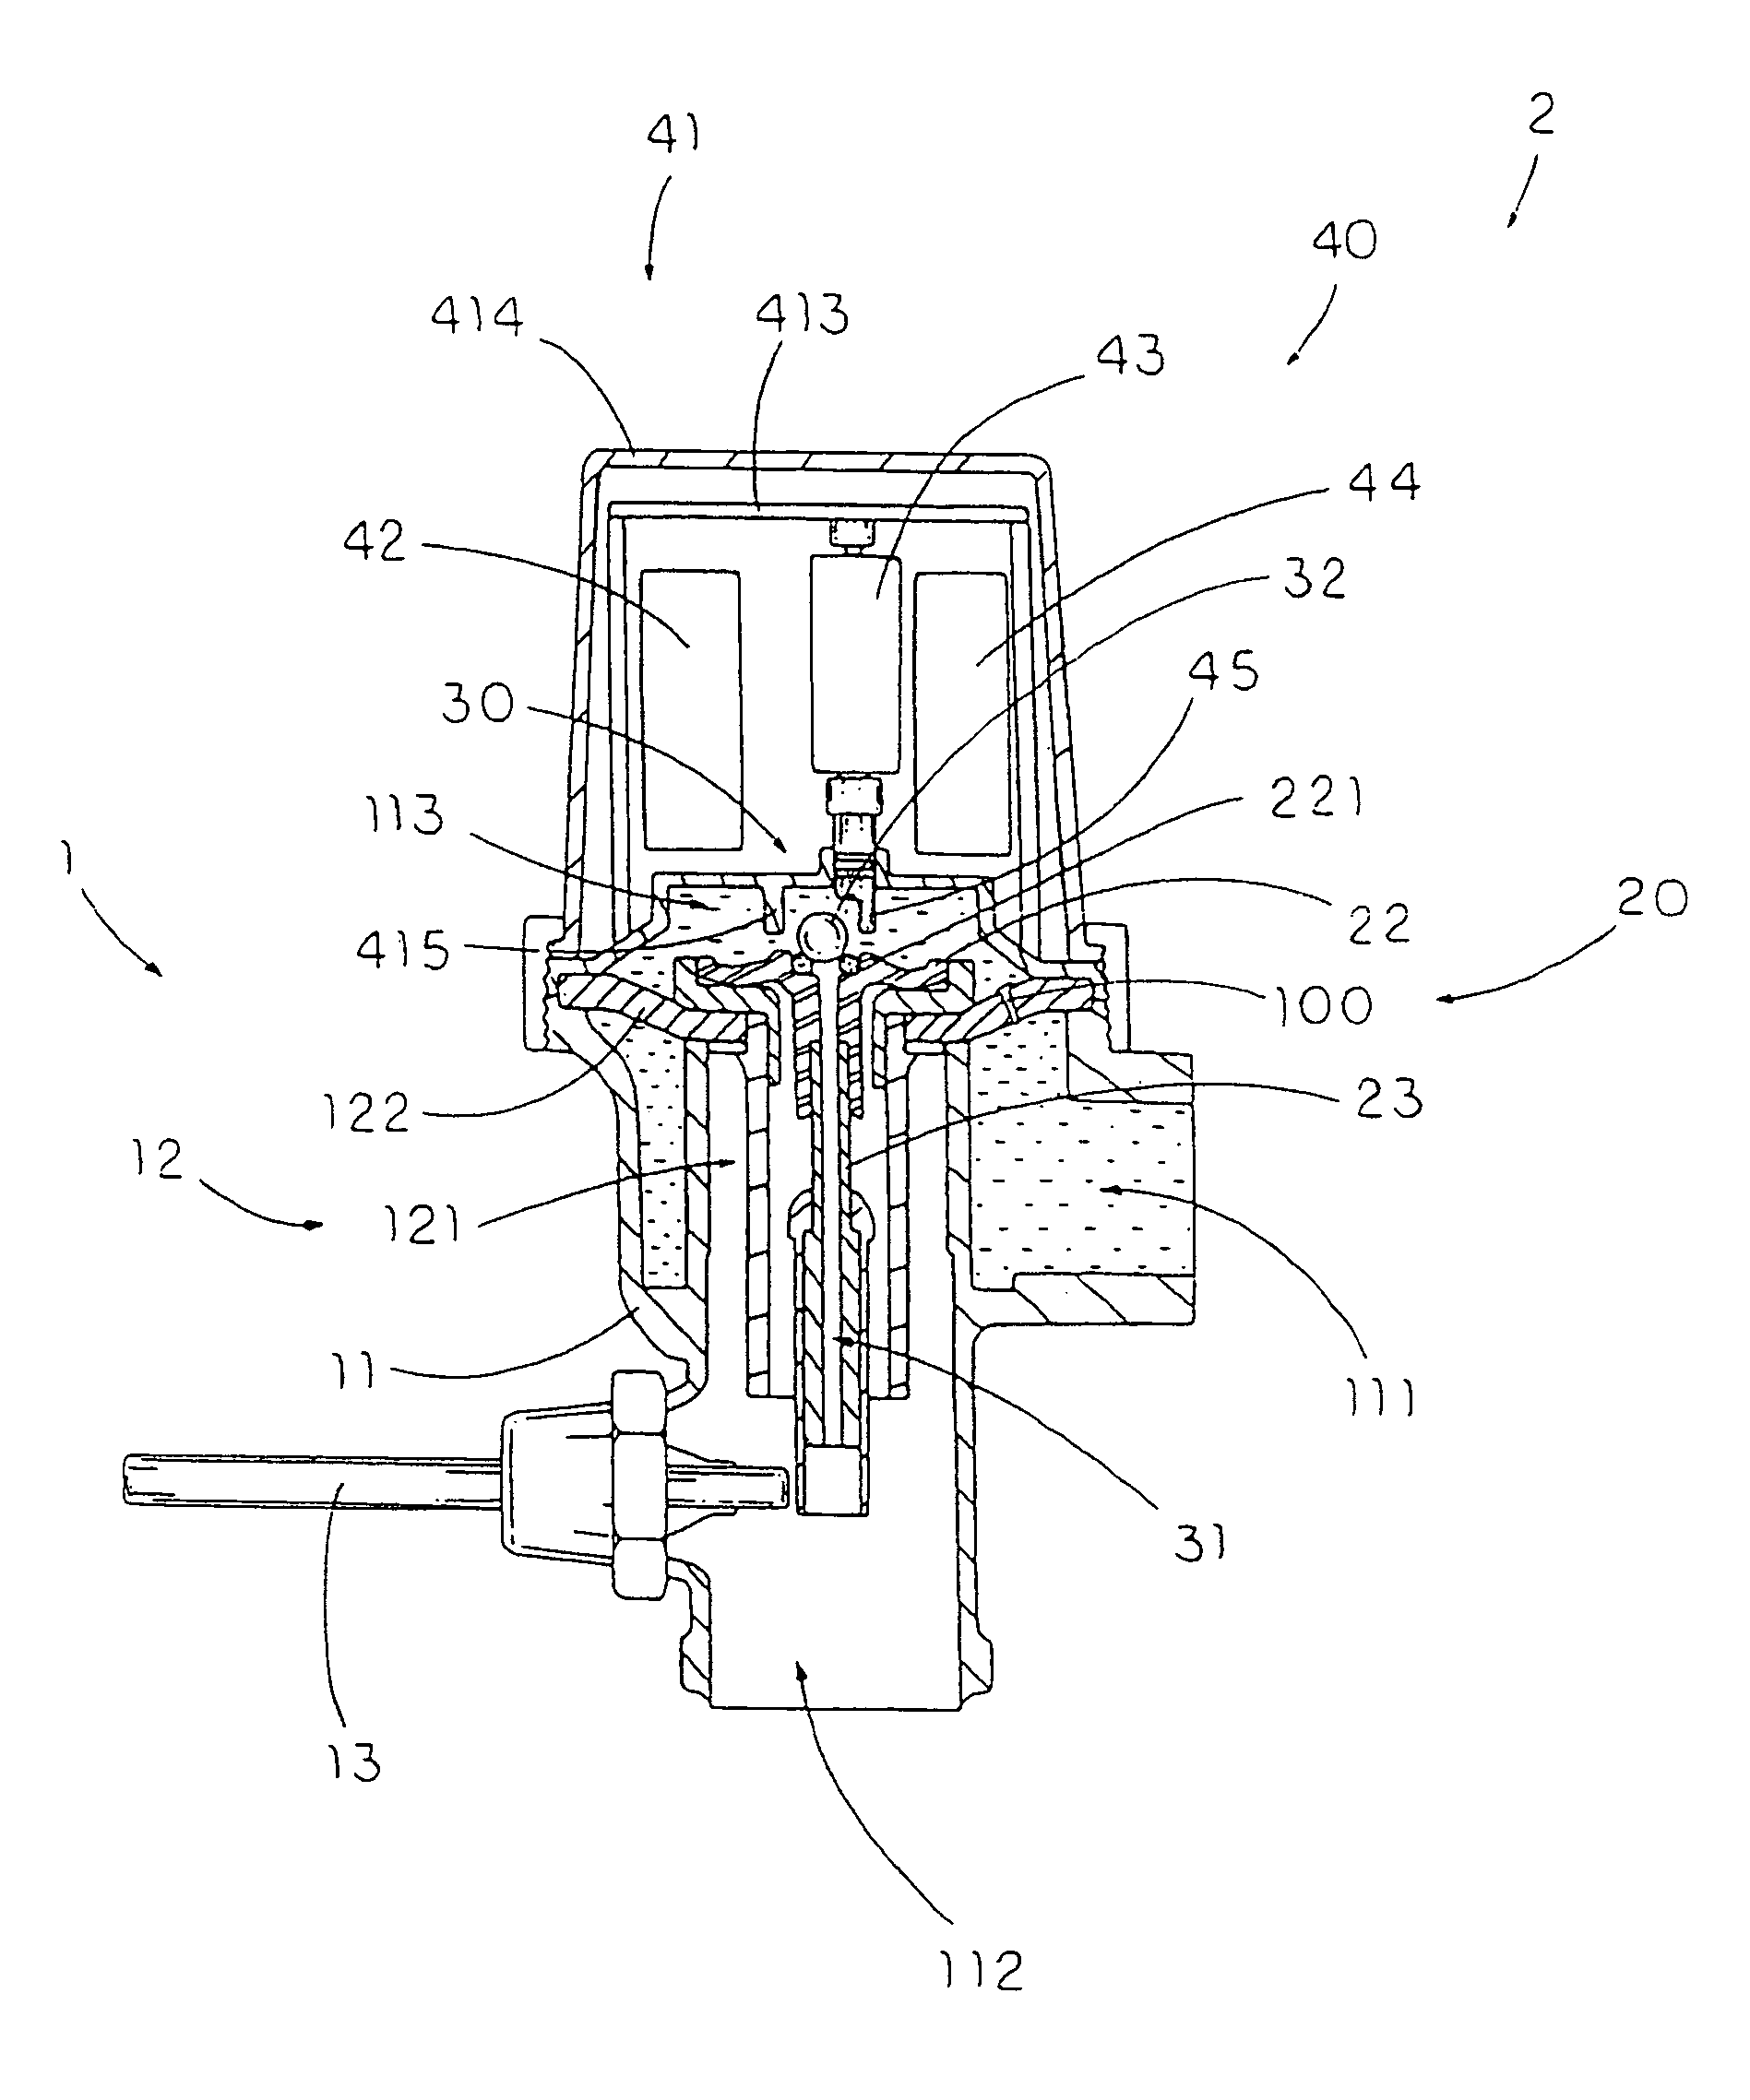 Automatic flush actuation apparatus